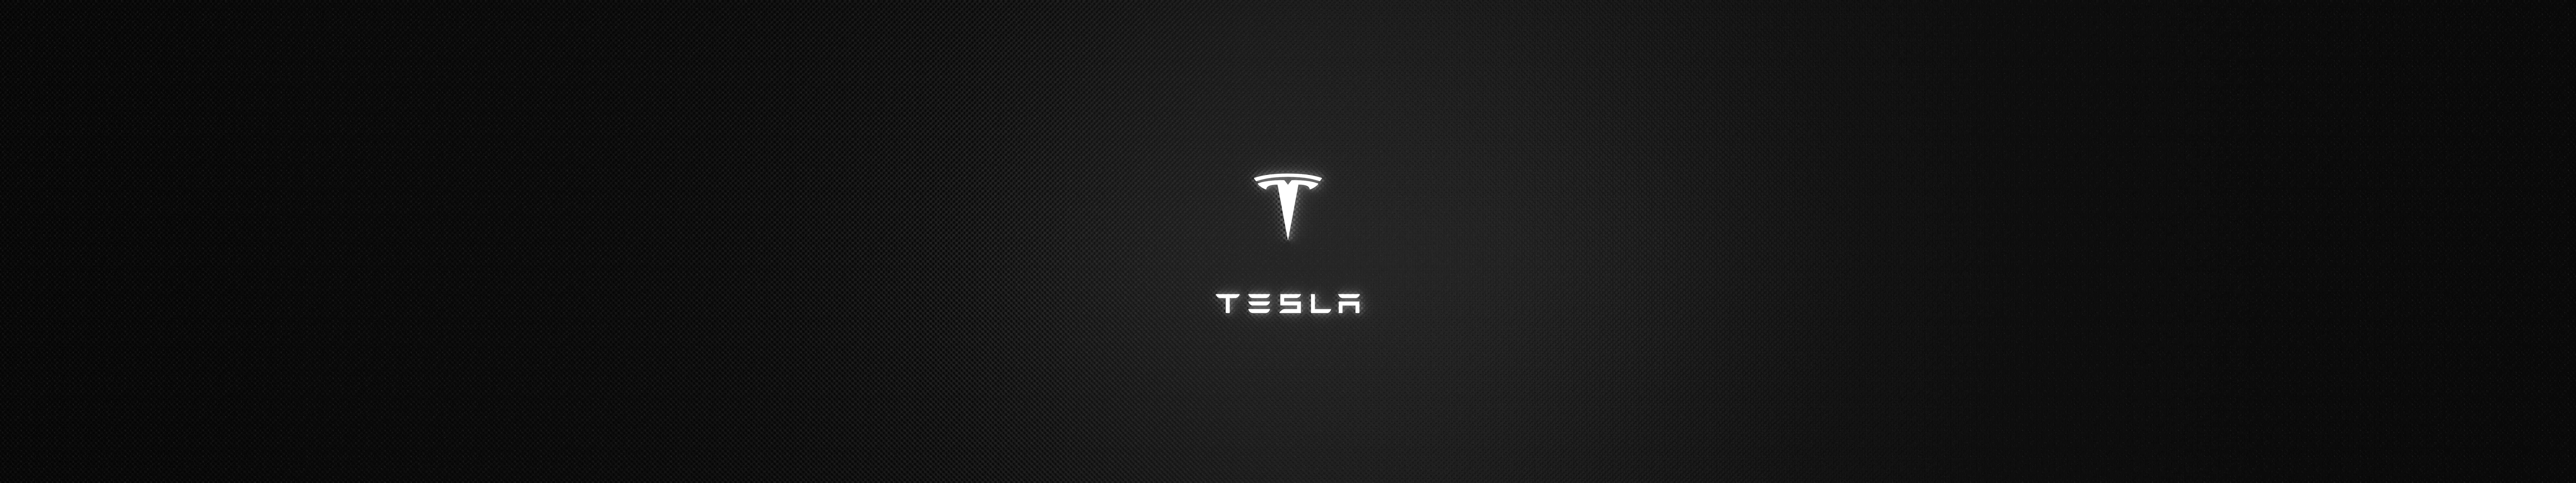 Tesla Logo Dark Triple Monitor Wallpaper